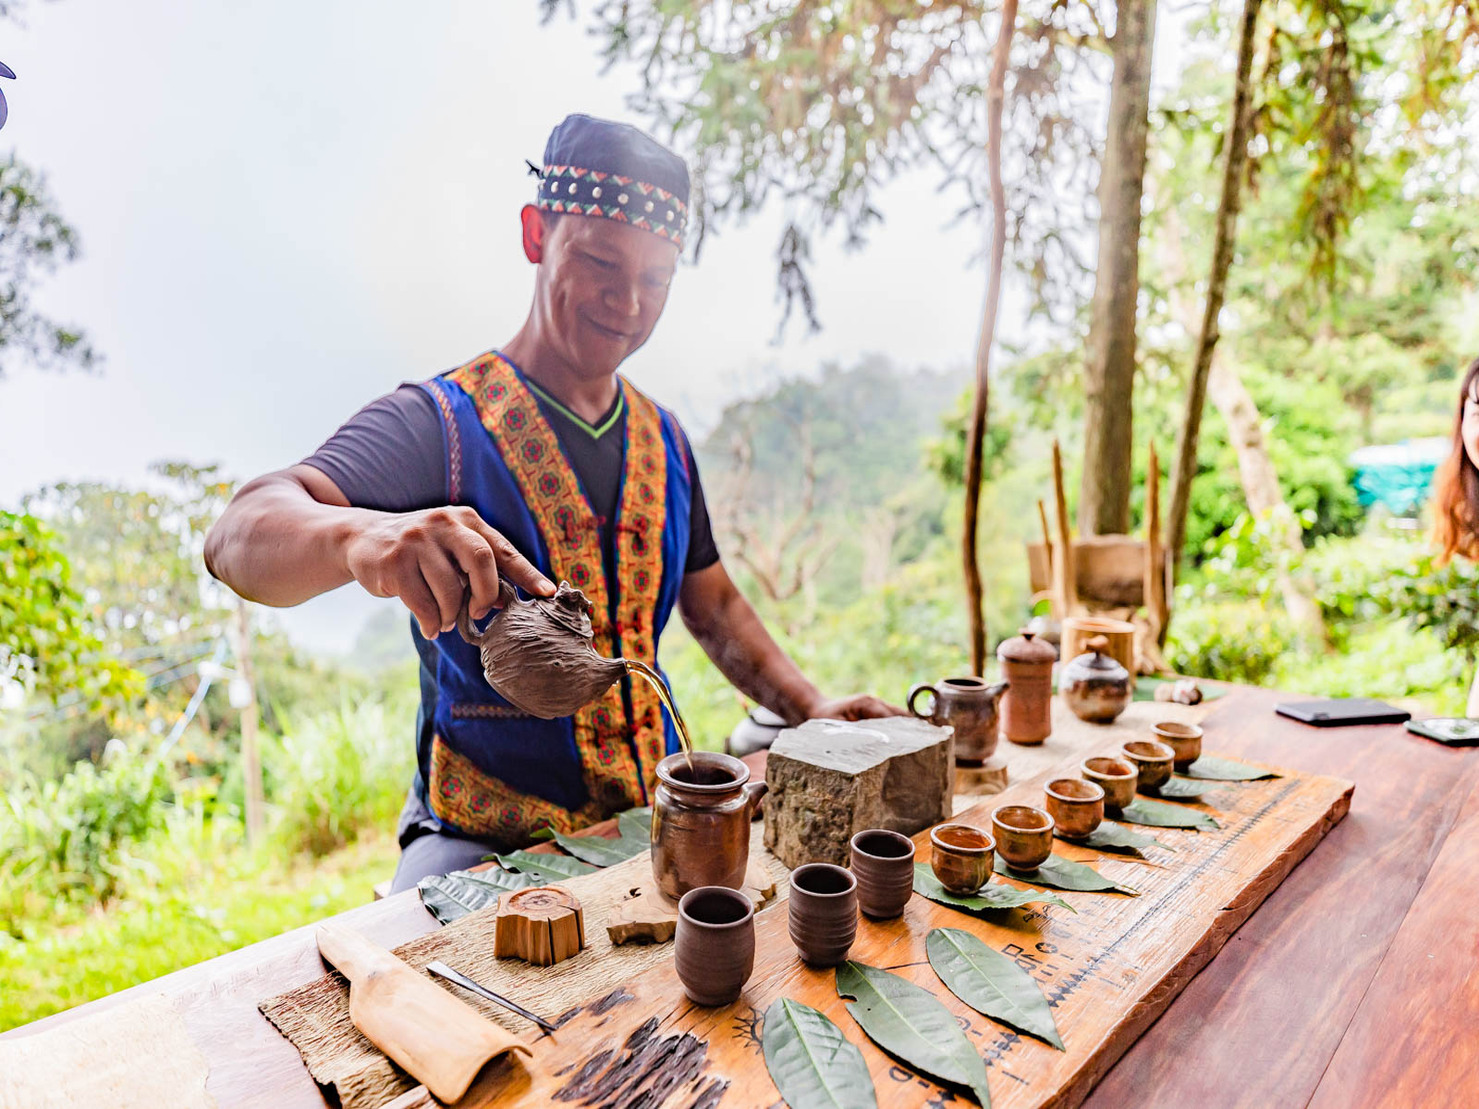 Baoshan Napu Native Tea Organic Tea Farm, where tea master Xie Guohua leads participants in a native mountain tea tasting event